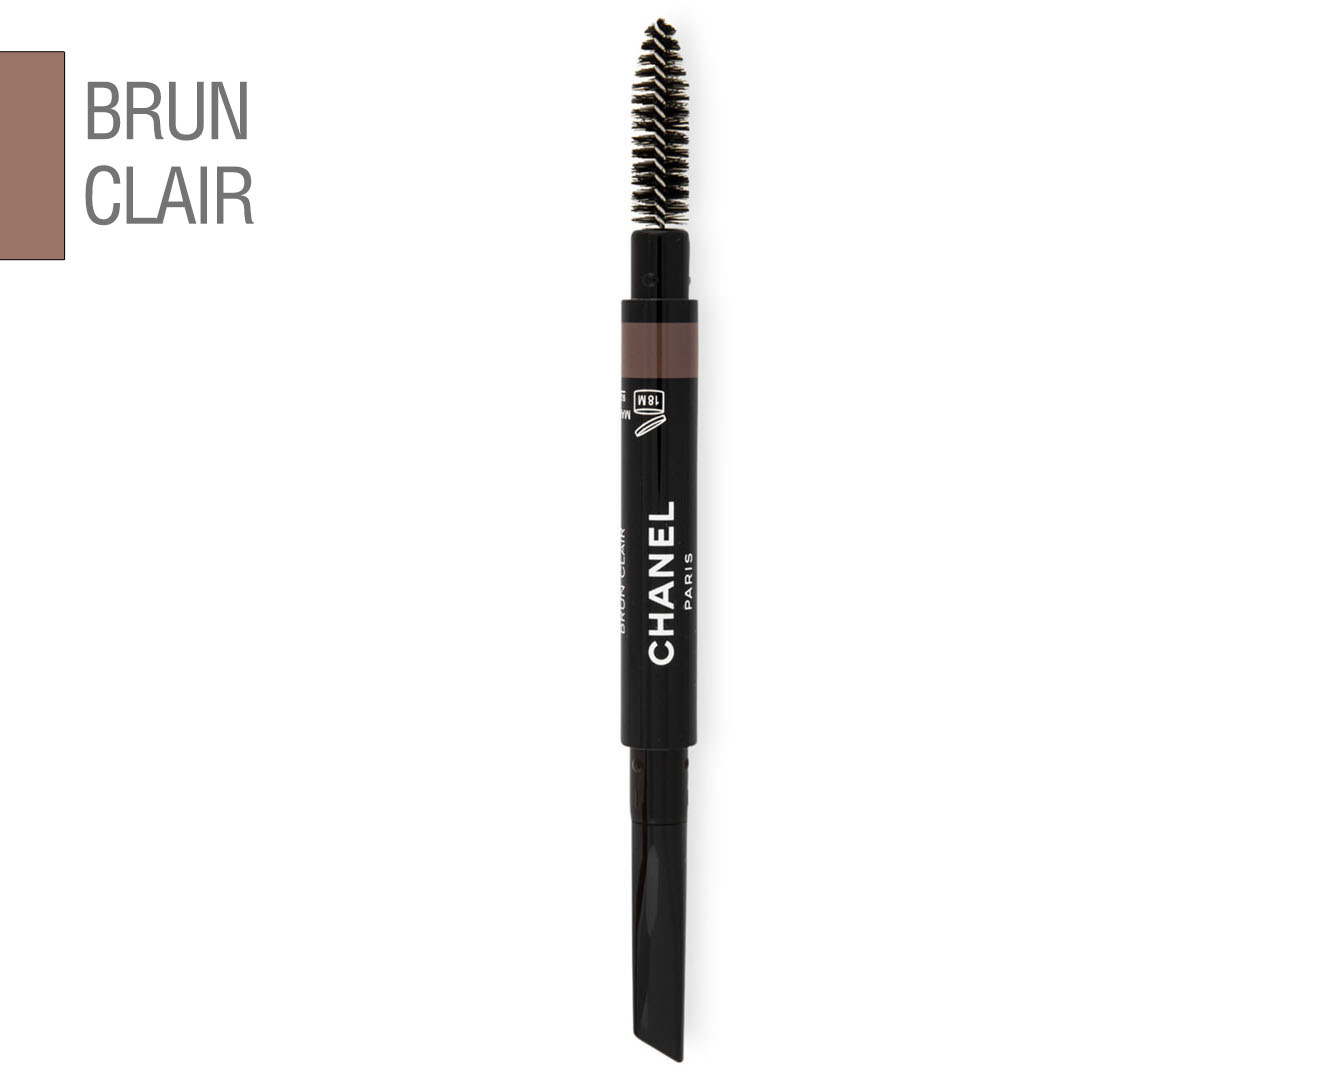 Chanel Stylo Sourcils Waterproof Eyebrow Pencil - #808 Brun Clair